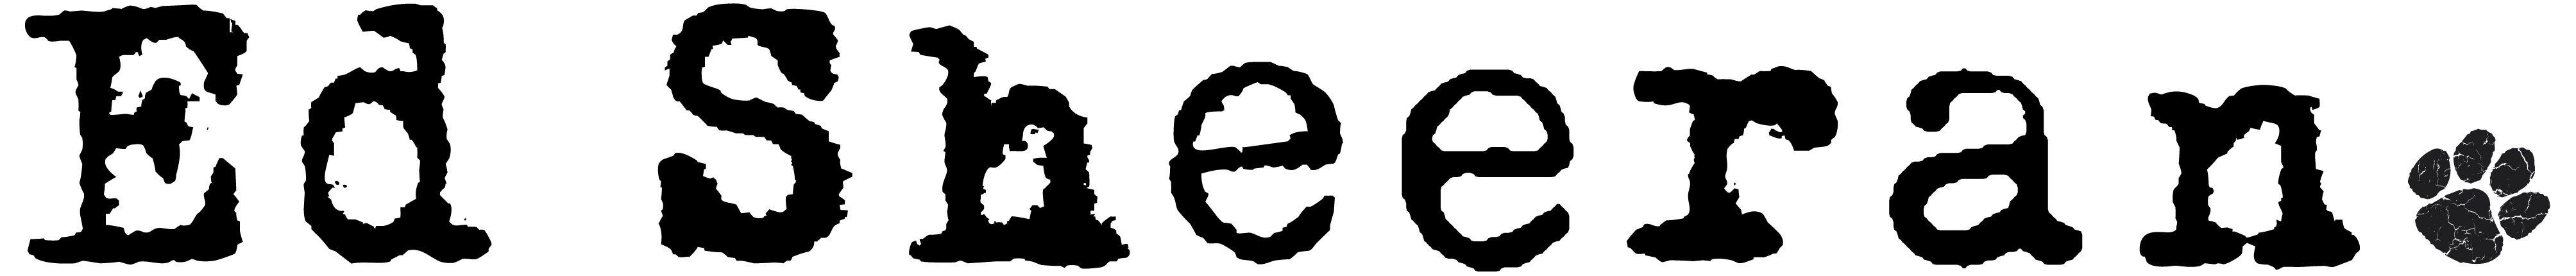 Ed Sheeran Logo - Image - Ed Sheeran logo.jpg | Logopedia | FANDOM powered by Wikia